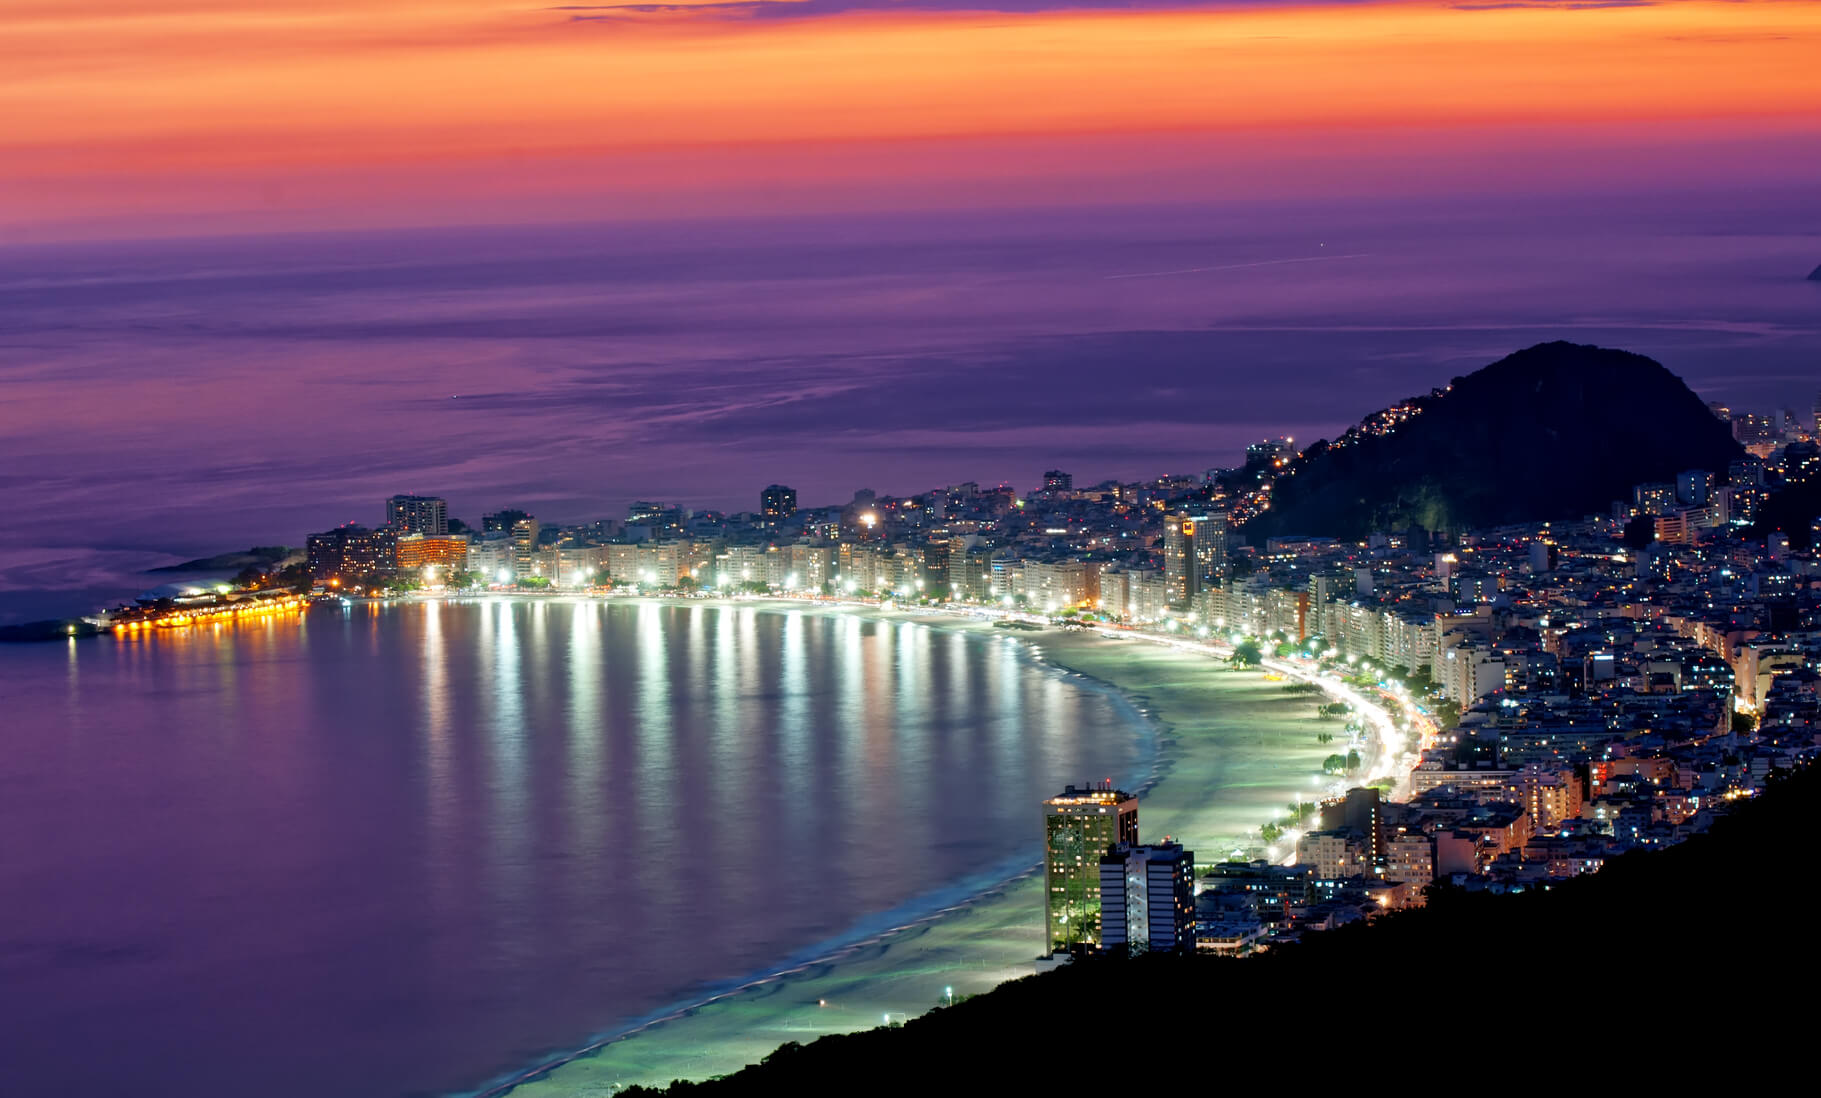 Flight deals from Miami to Rio de Janeiro, Brazil | Secret Flying